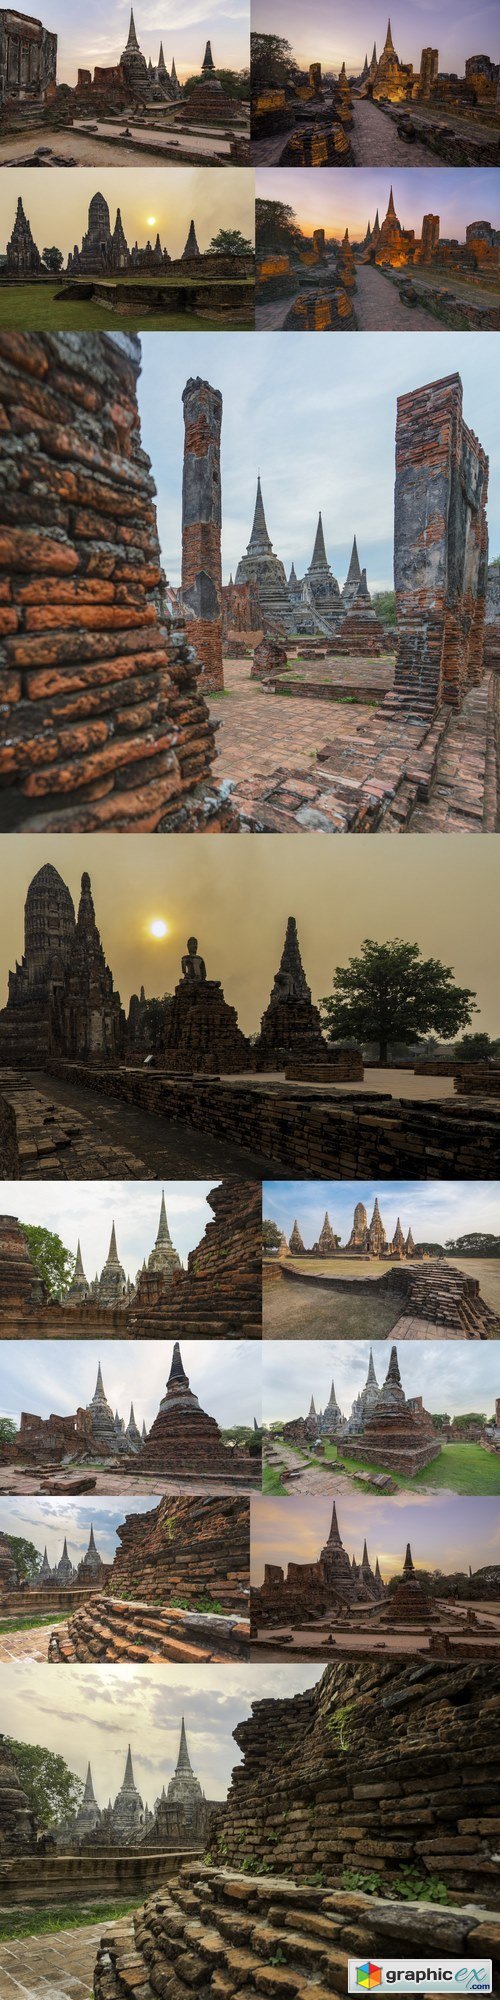 Temple in Ayutthaya historical park Thailand